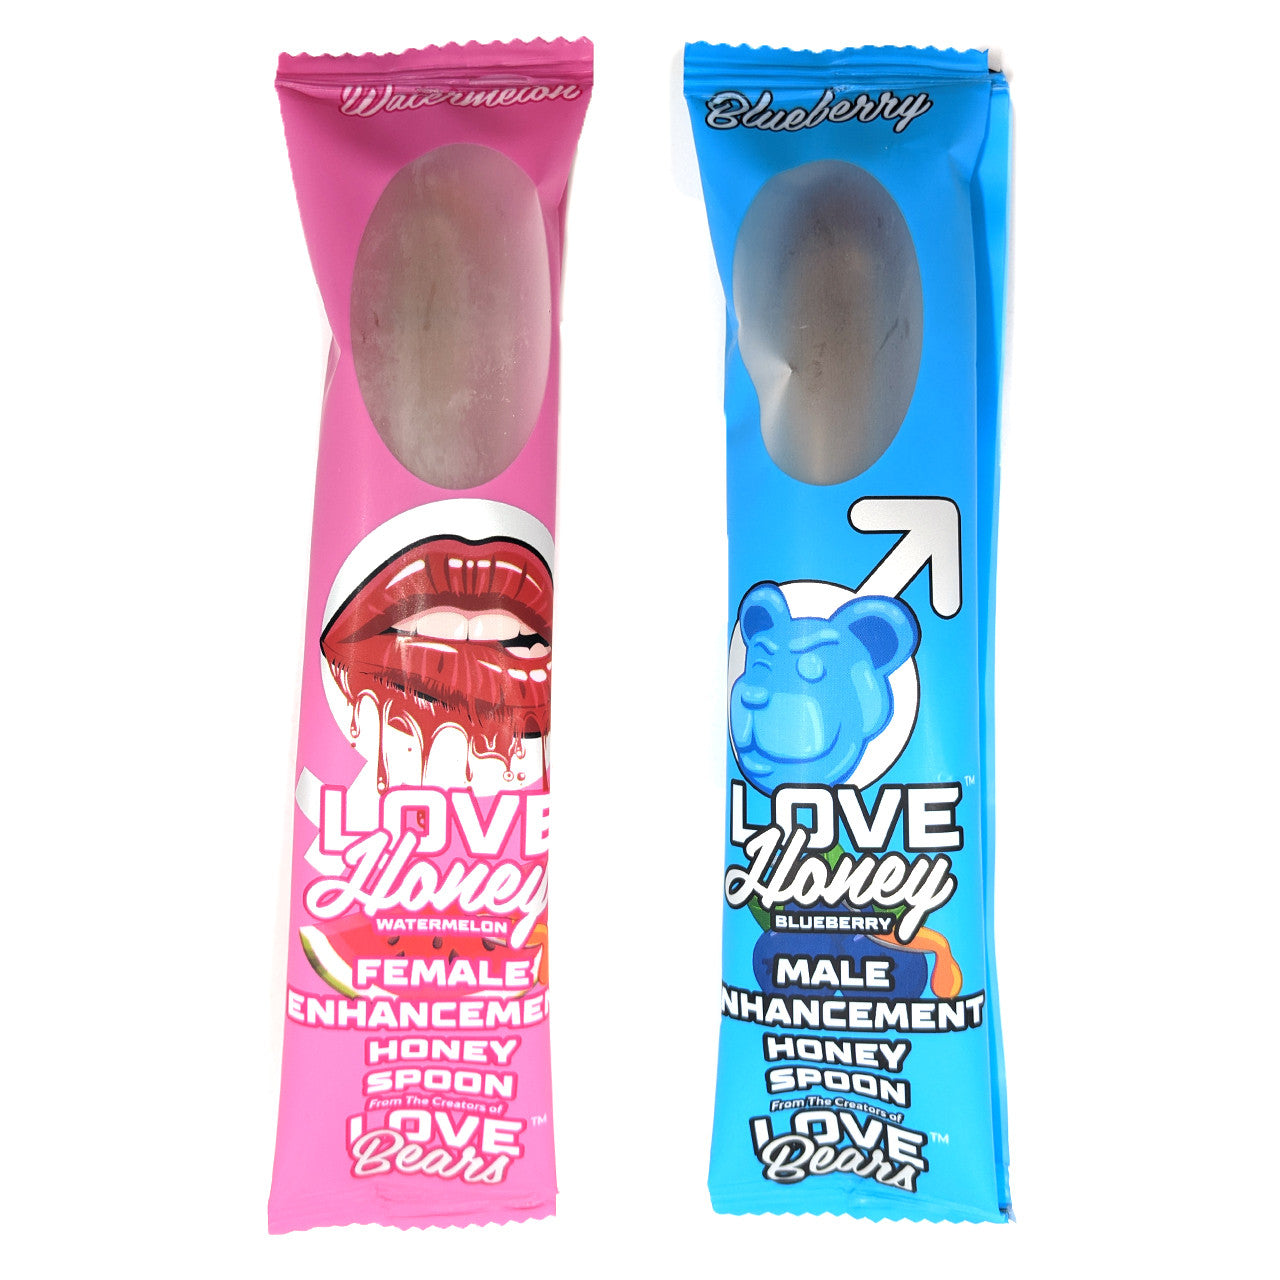 Love Honey Sexual Enhancement Spoon - BOOM Headshop